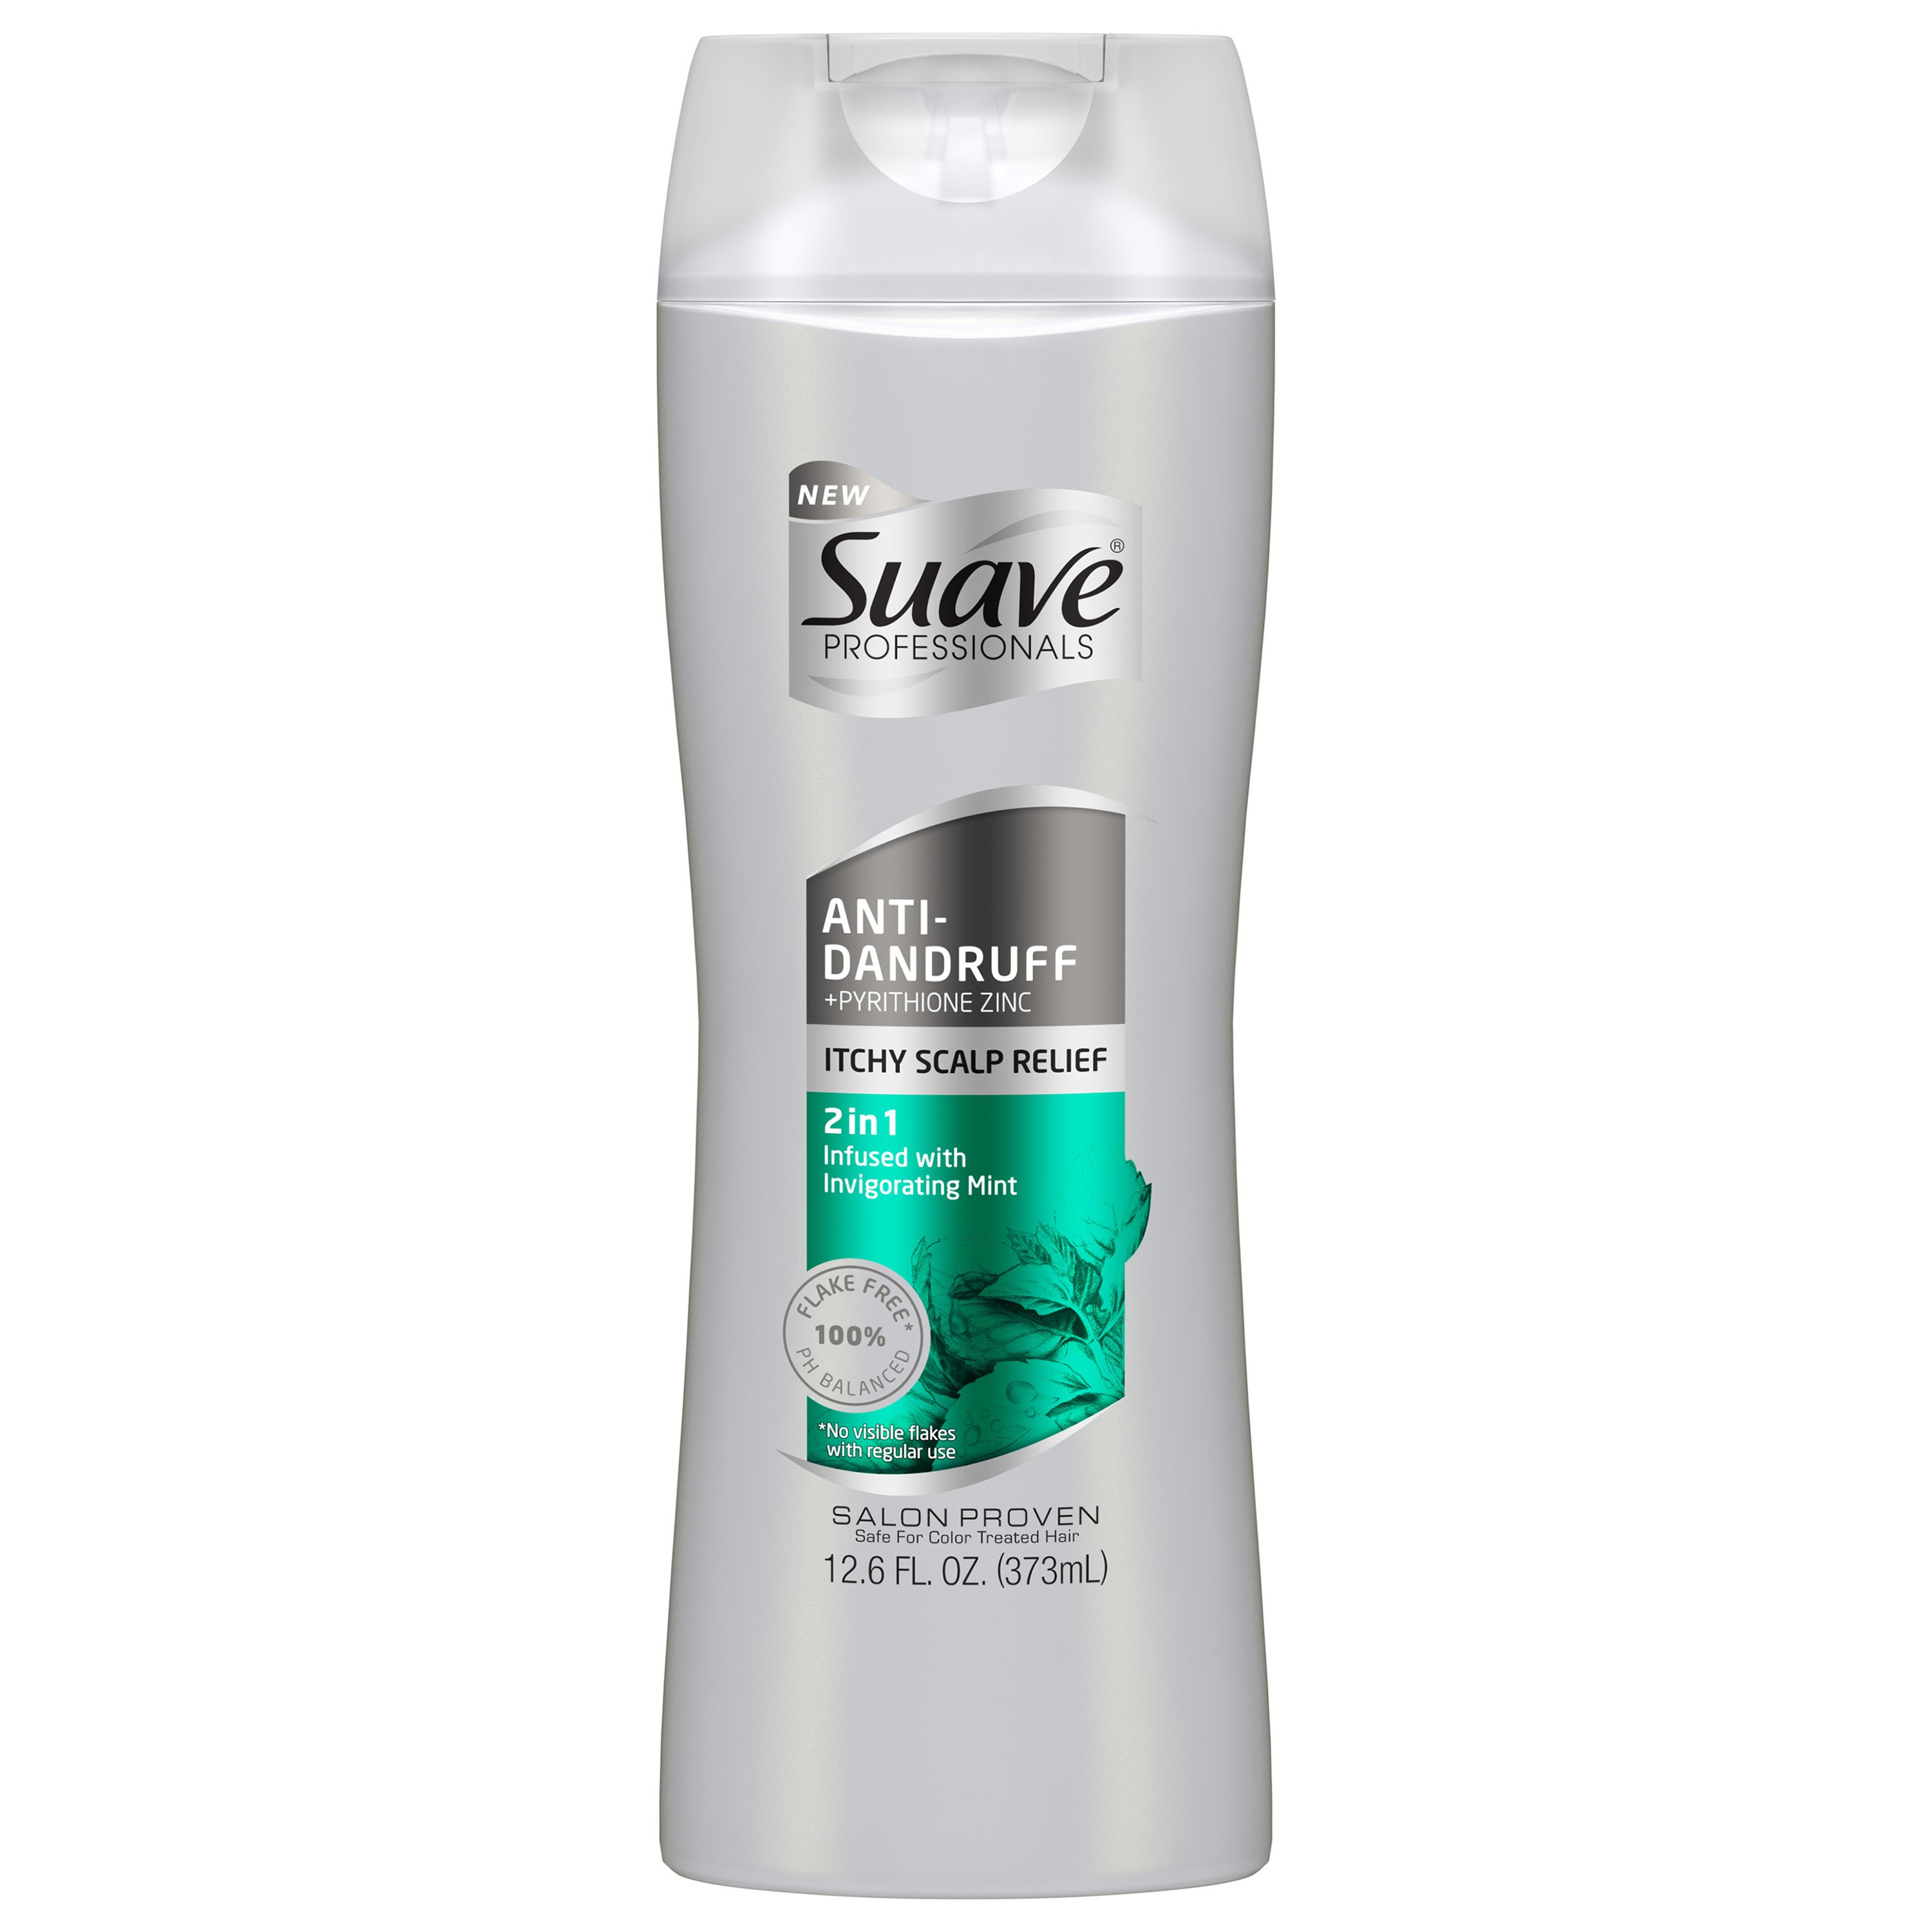 Suave Professionals Itchy Scalp Anti Dandruff 2 in Shampoo and Conditioner - Shop Shampoo & Conditioner at H-E-B